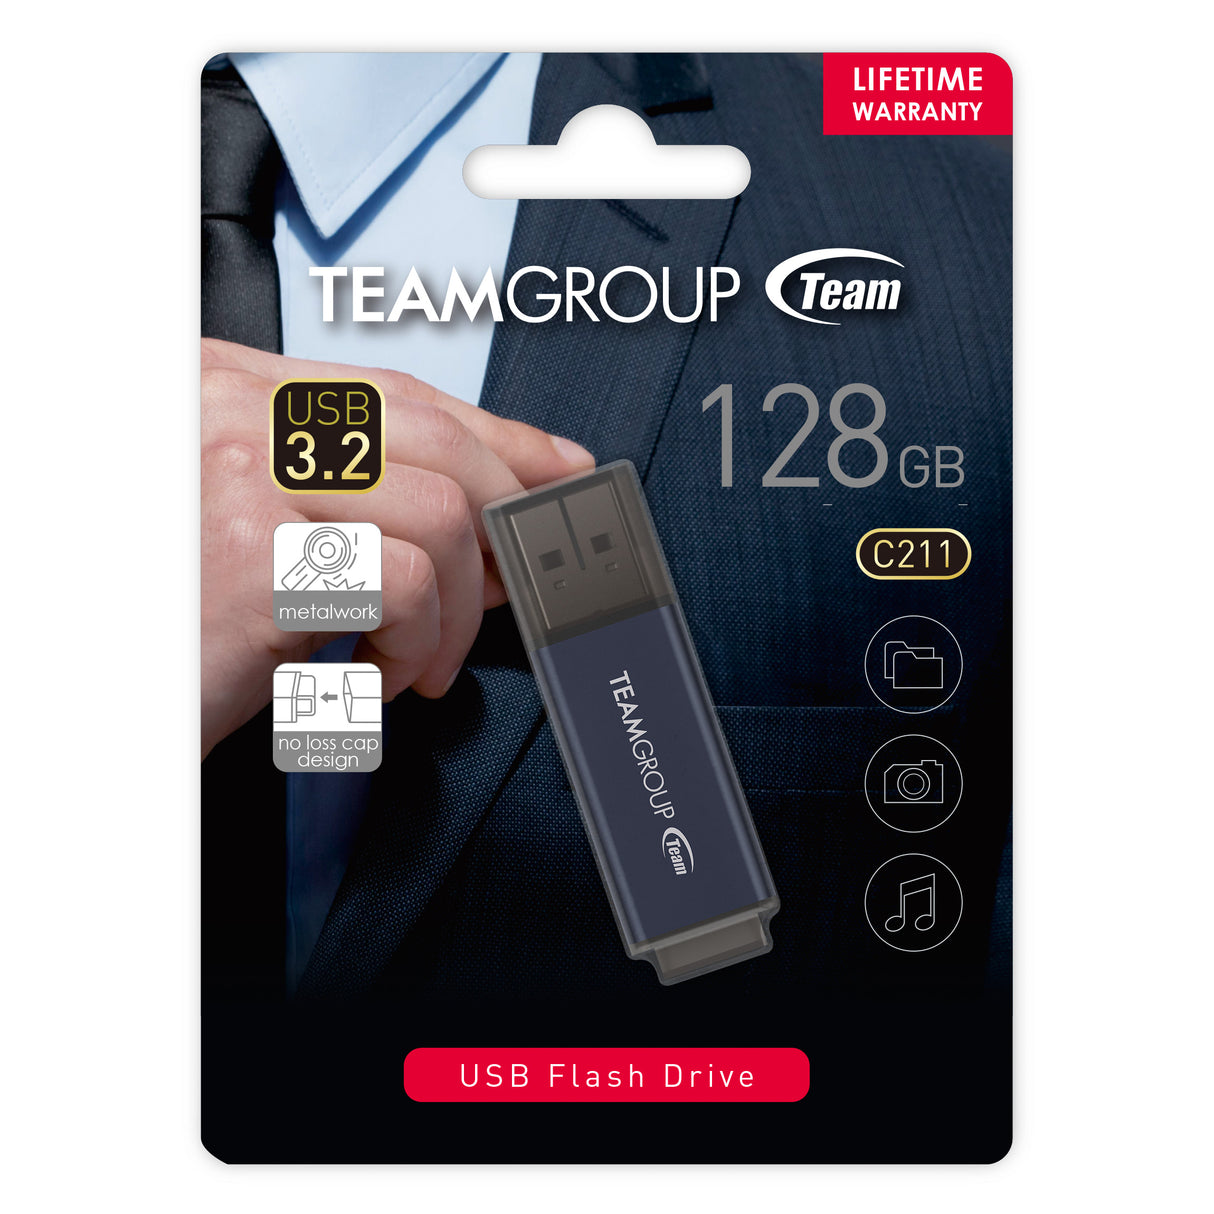 Teamgroup 128GB C211 USB 3.2 spominski ključek